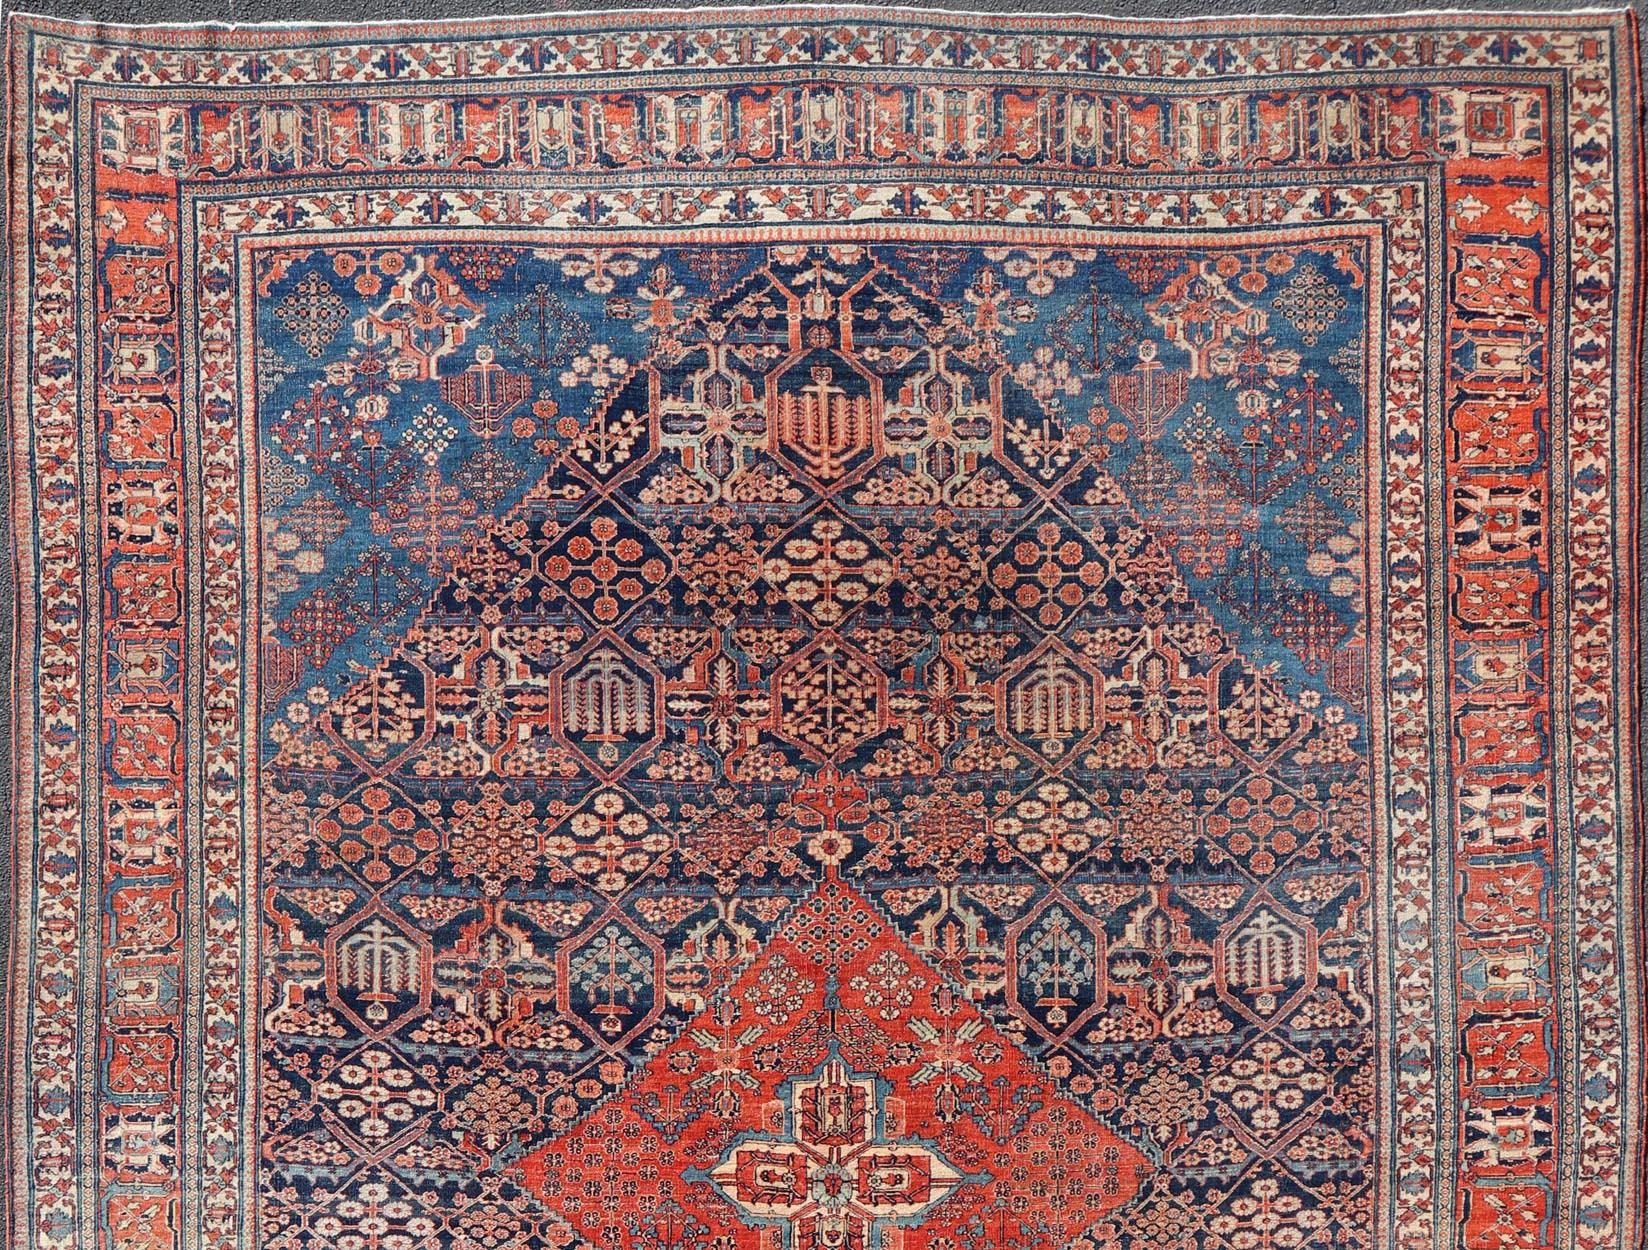 Tribal Large Antique Persian Joshaghan Rug with All-Over Sub-Geometric Diamond Design